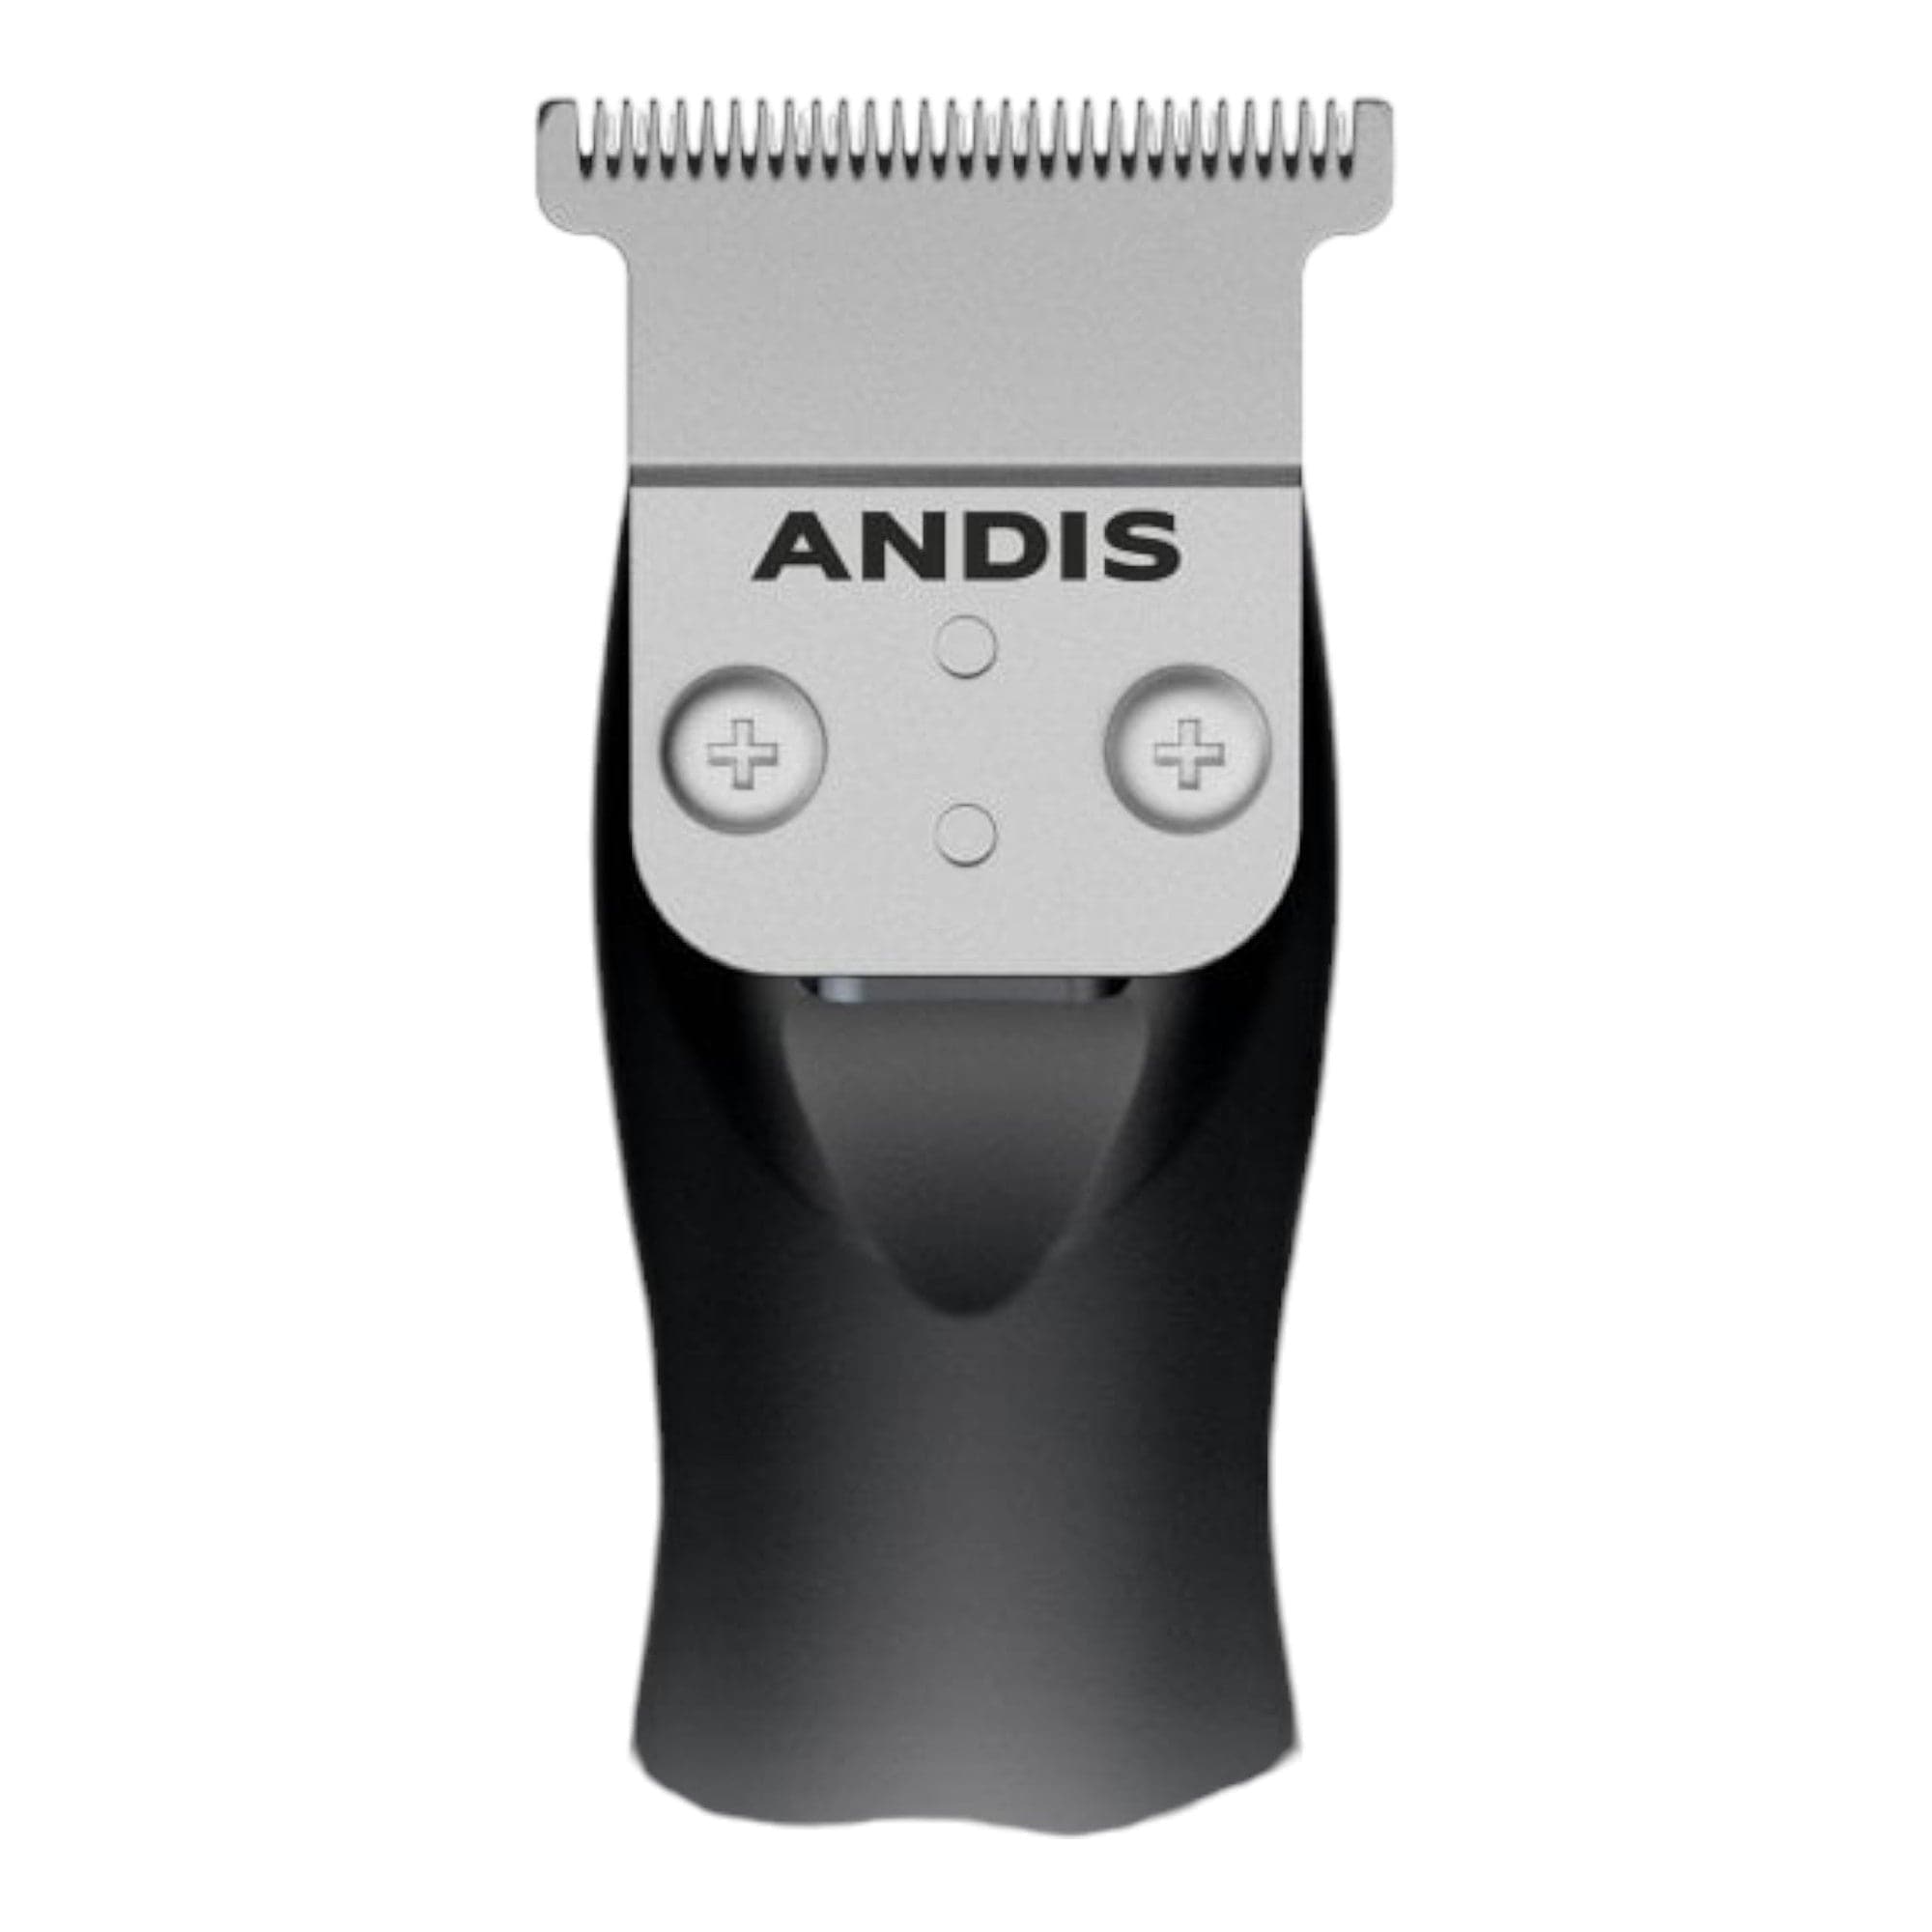 Andis - Slimline Pro Li Trimmer Galaxy D-8 561561